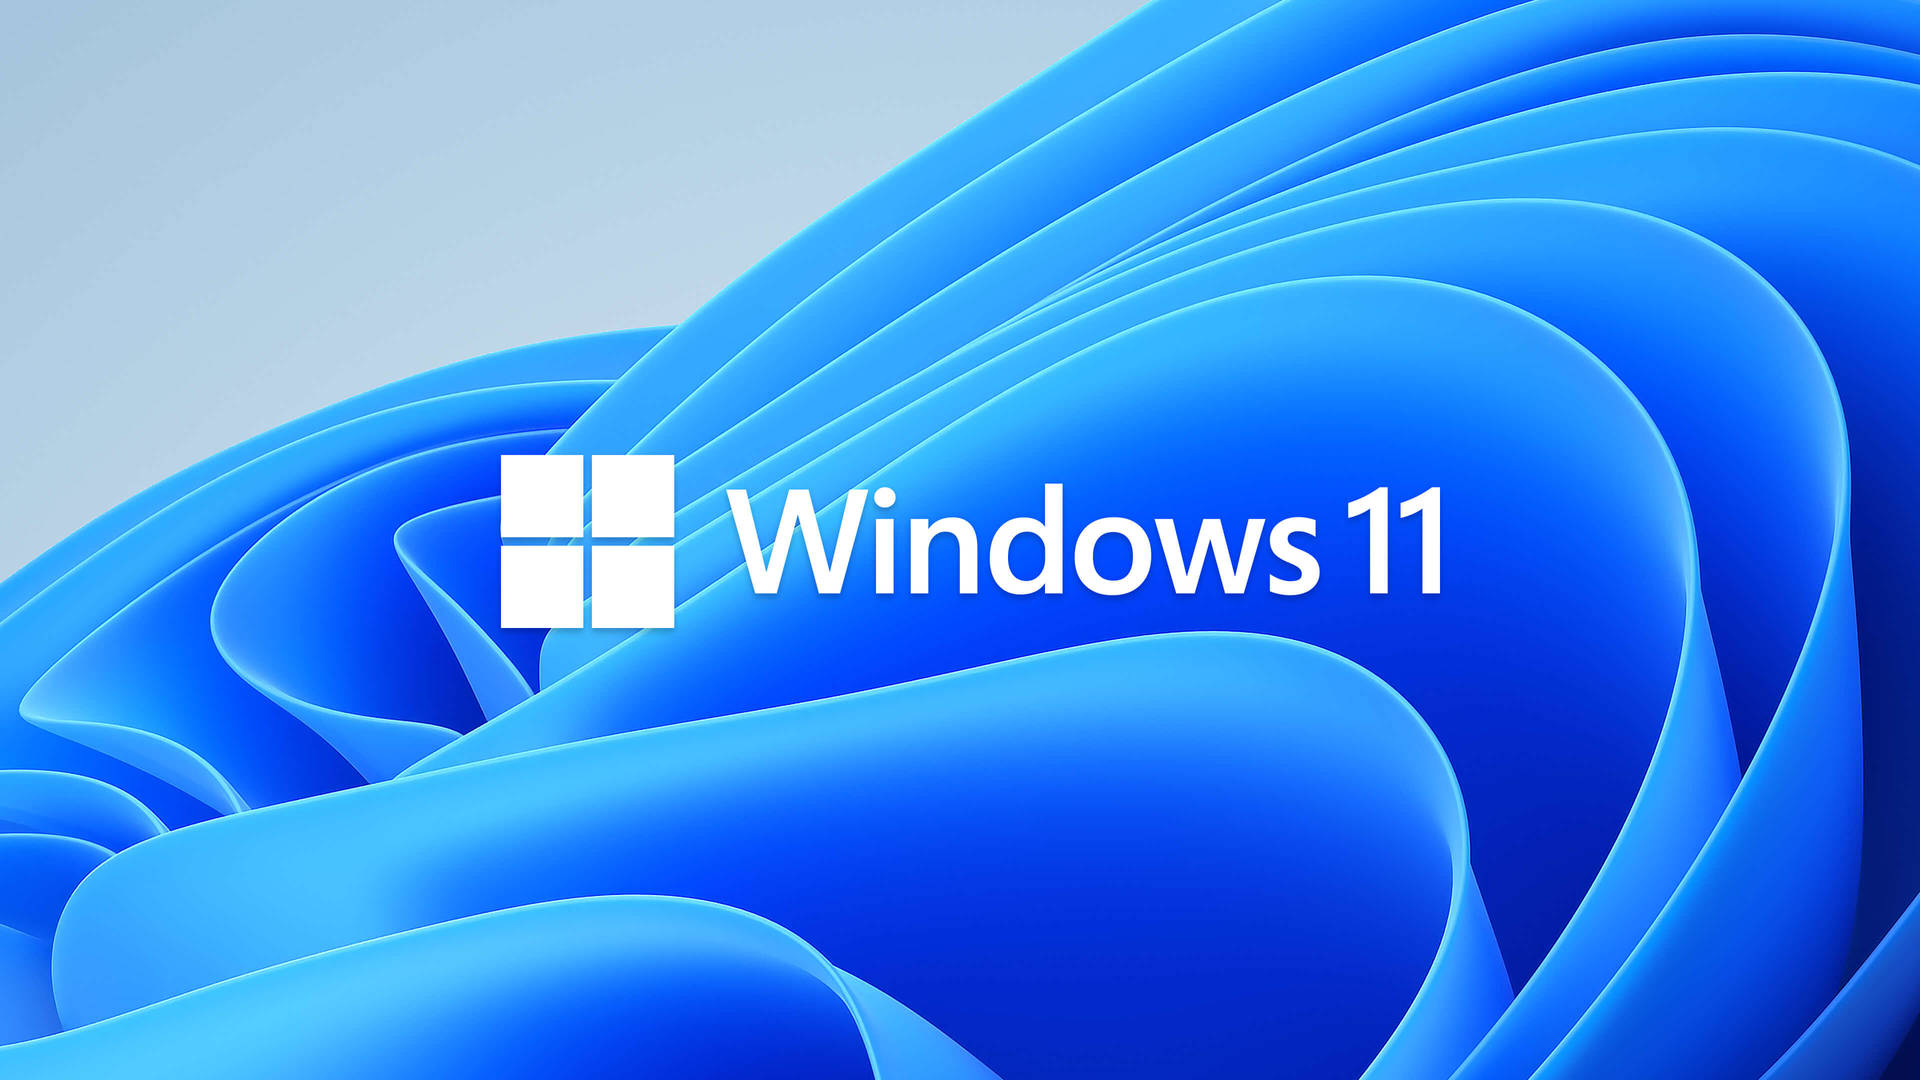 Windows 11 Pictures Wallpaper